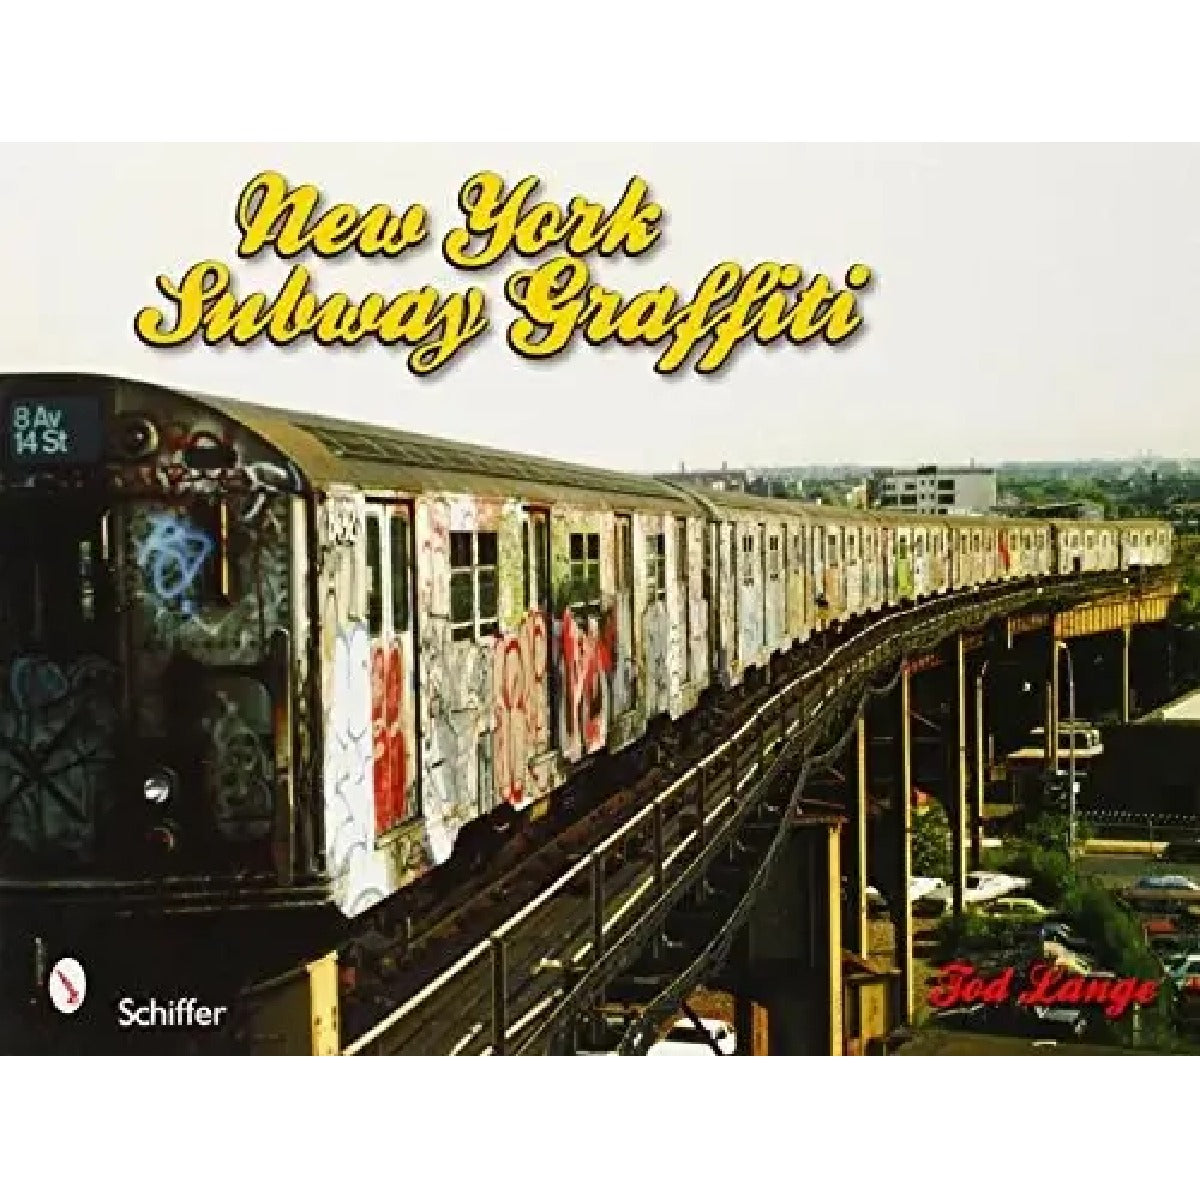 New York Subway Graffiti Book For Sale at the Museum of Graffiti